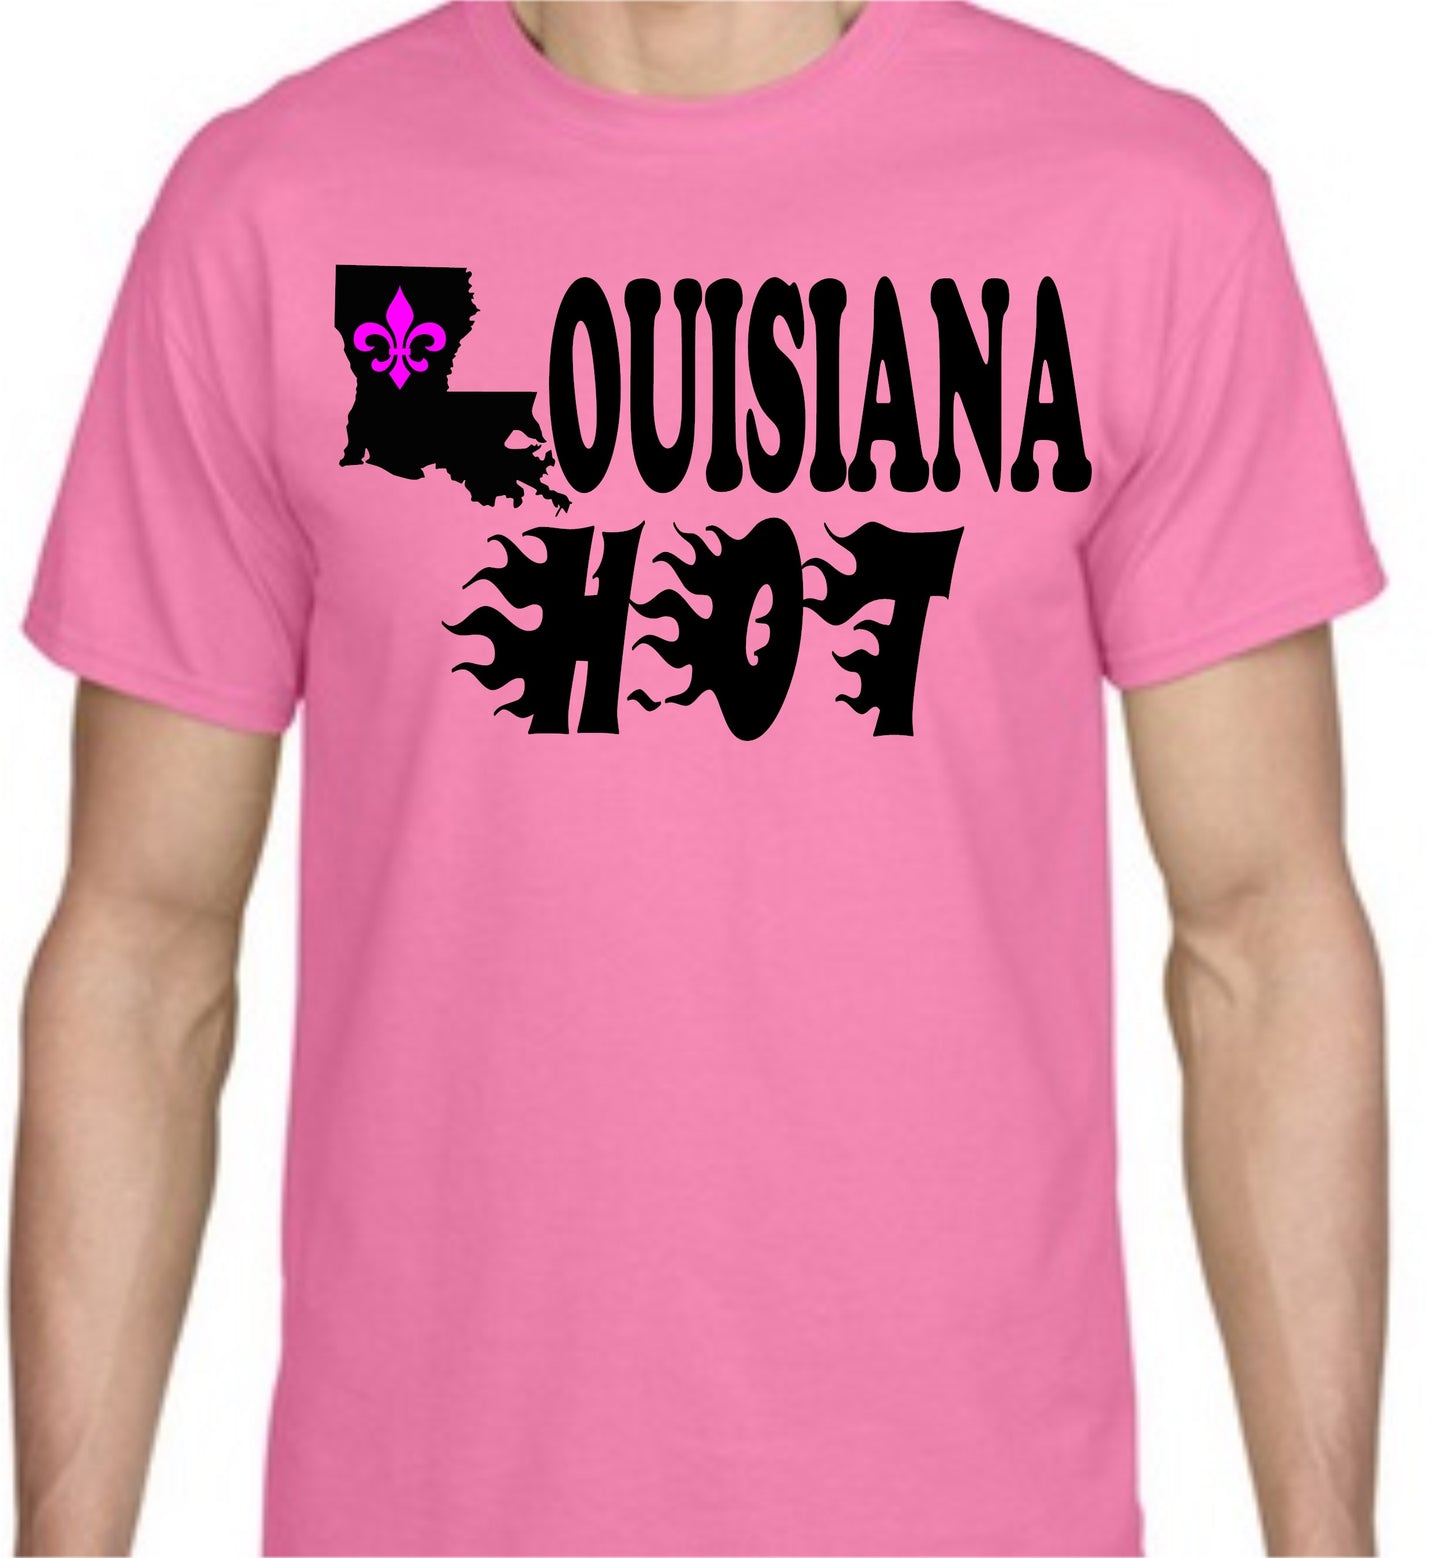 Louisiana Hot T-Shirt (Click For Color Variation)